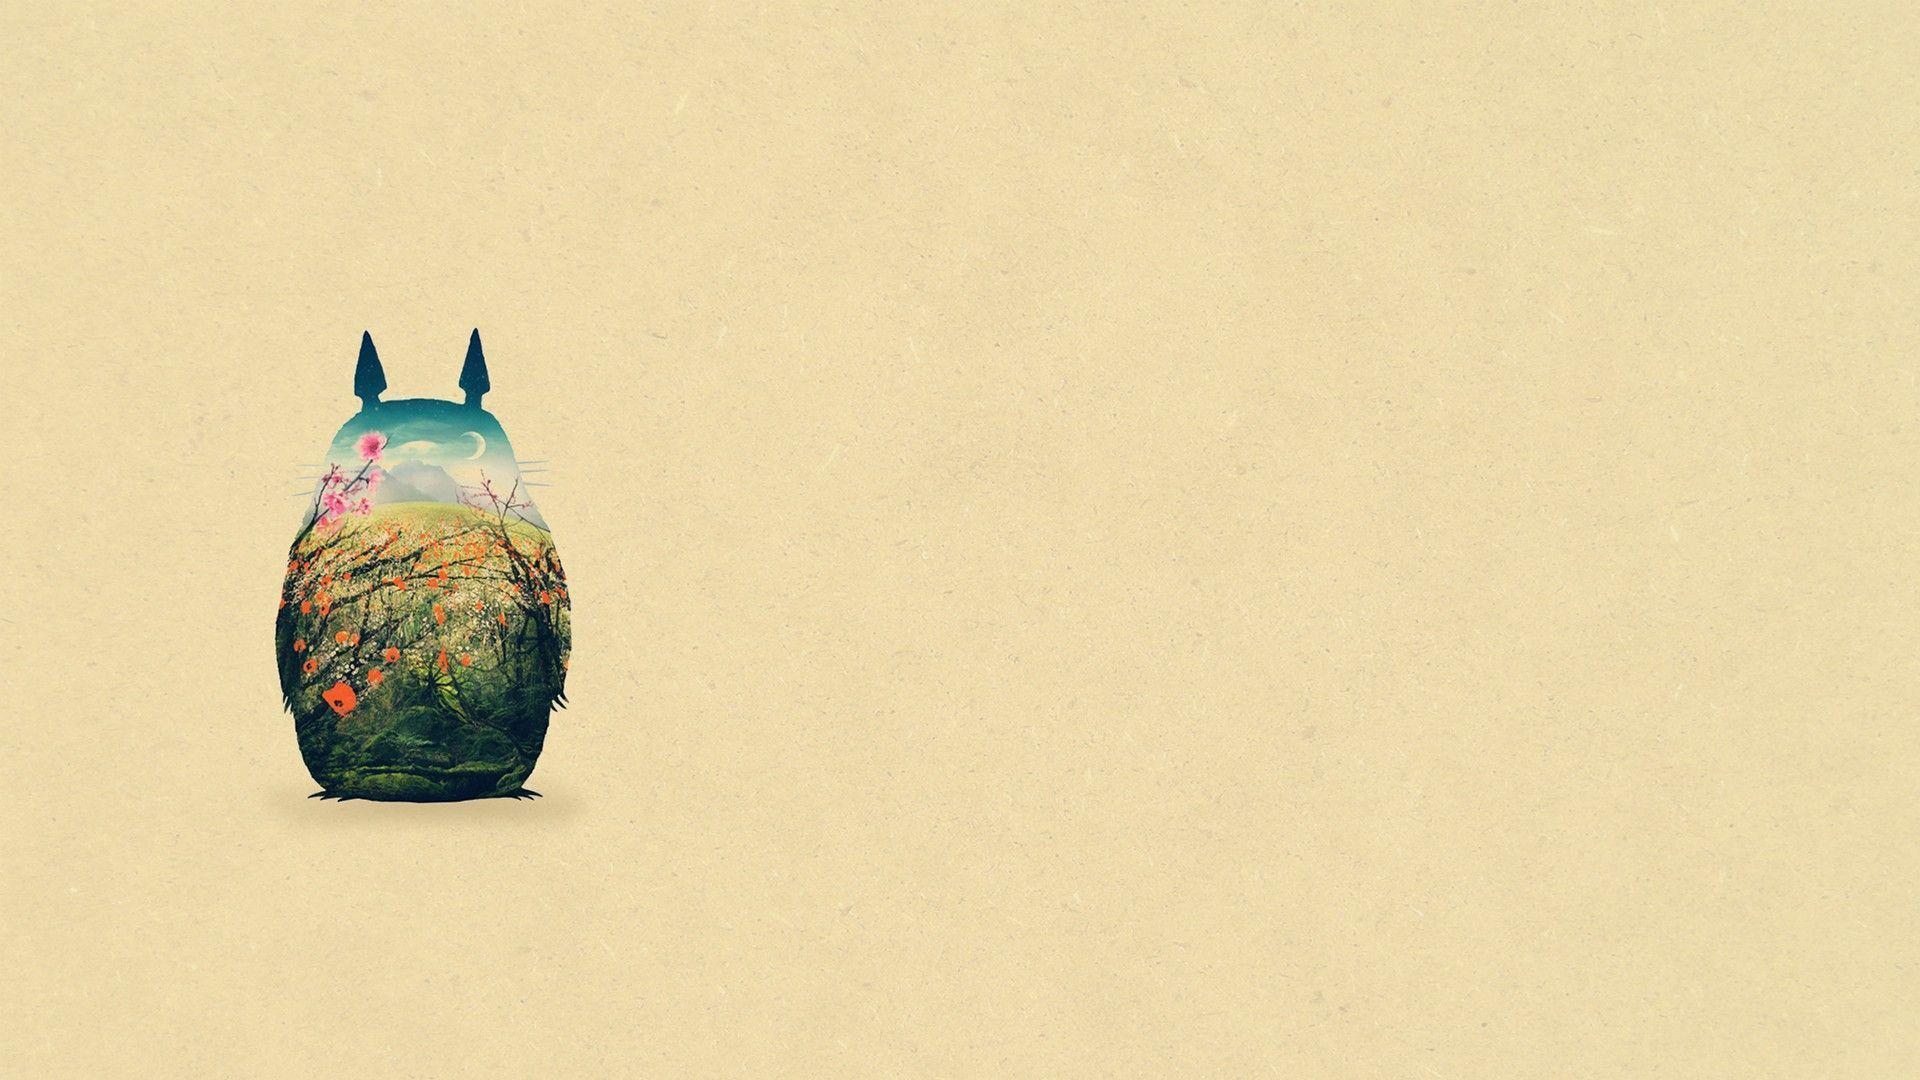 My Neighbor Totoro Wallpaper 1920x1080 px Free Download